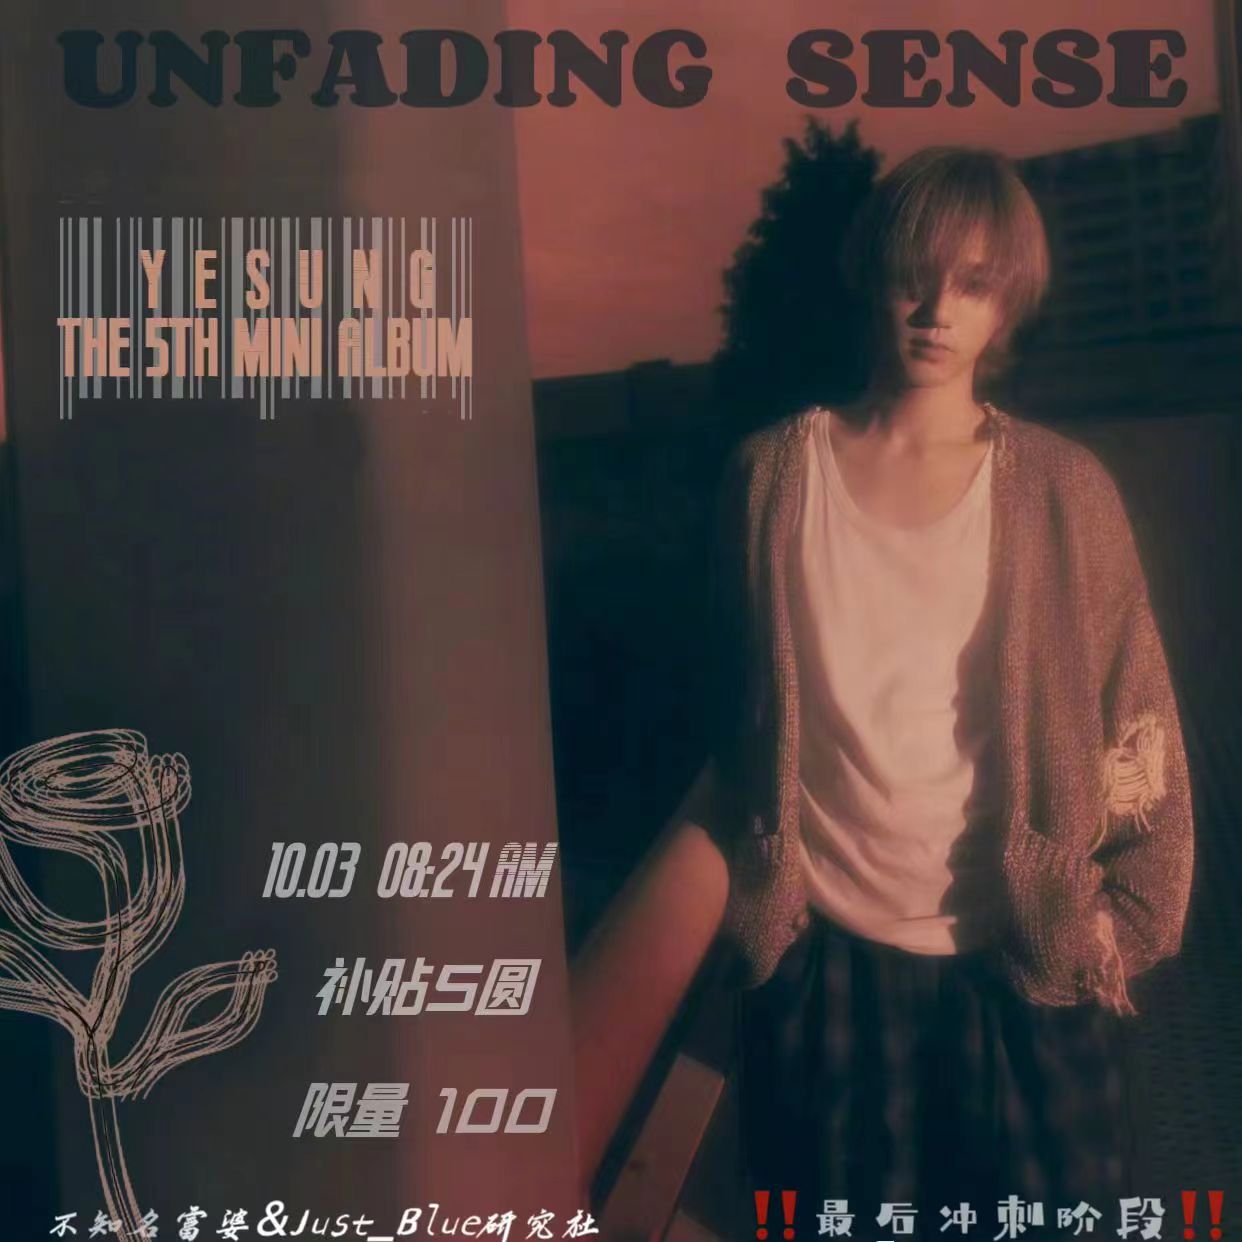 [全款 限量50张 补贴5元] [Ktown4u Special Gift] YESUNG - The 5th Mini Album [Unfading Sense] (Photo Book Ver.) (Random Ver.)_Just_Blue研究社 